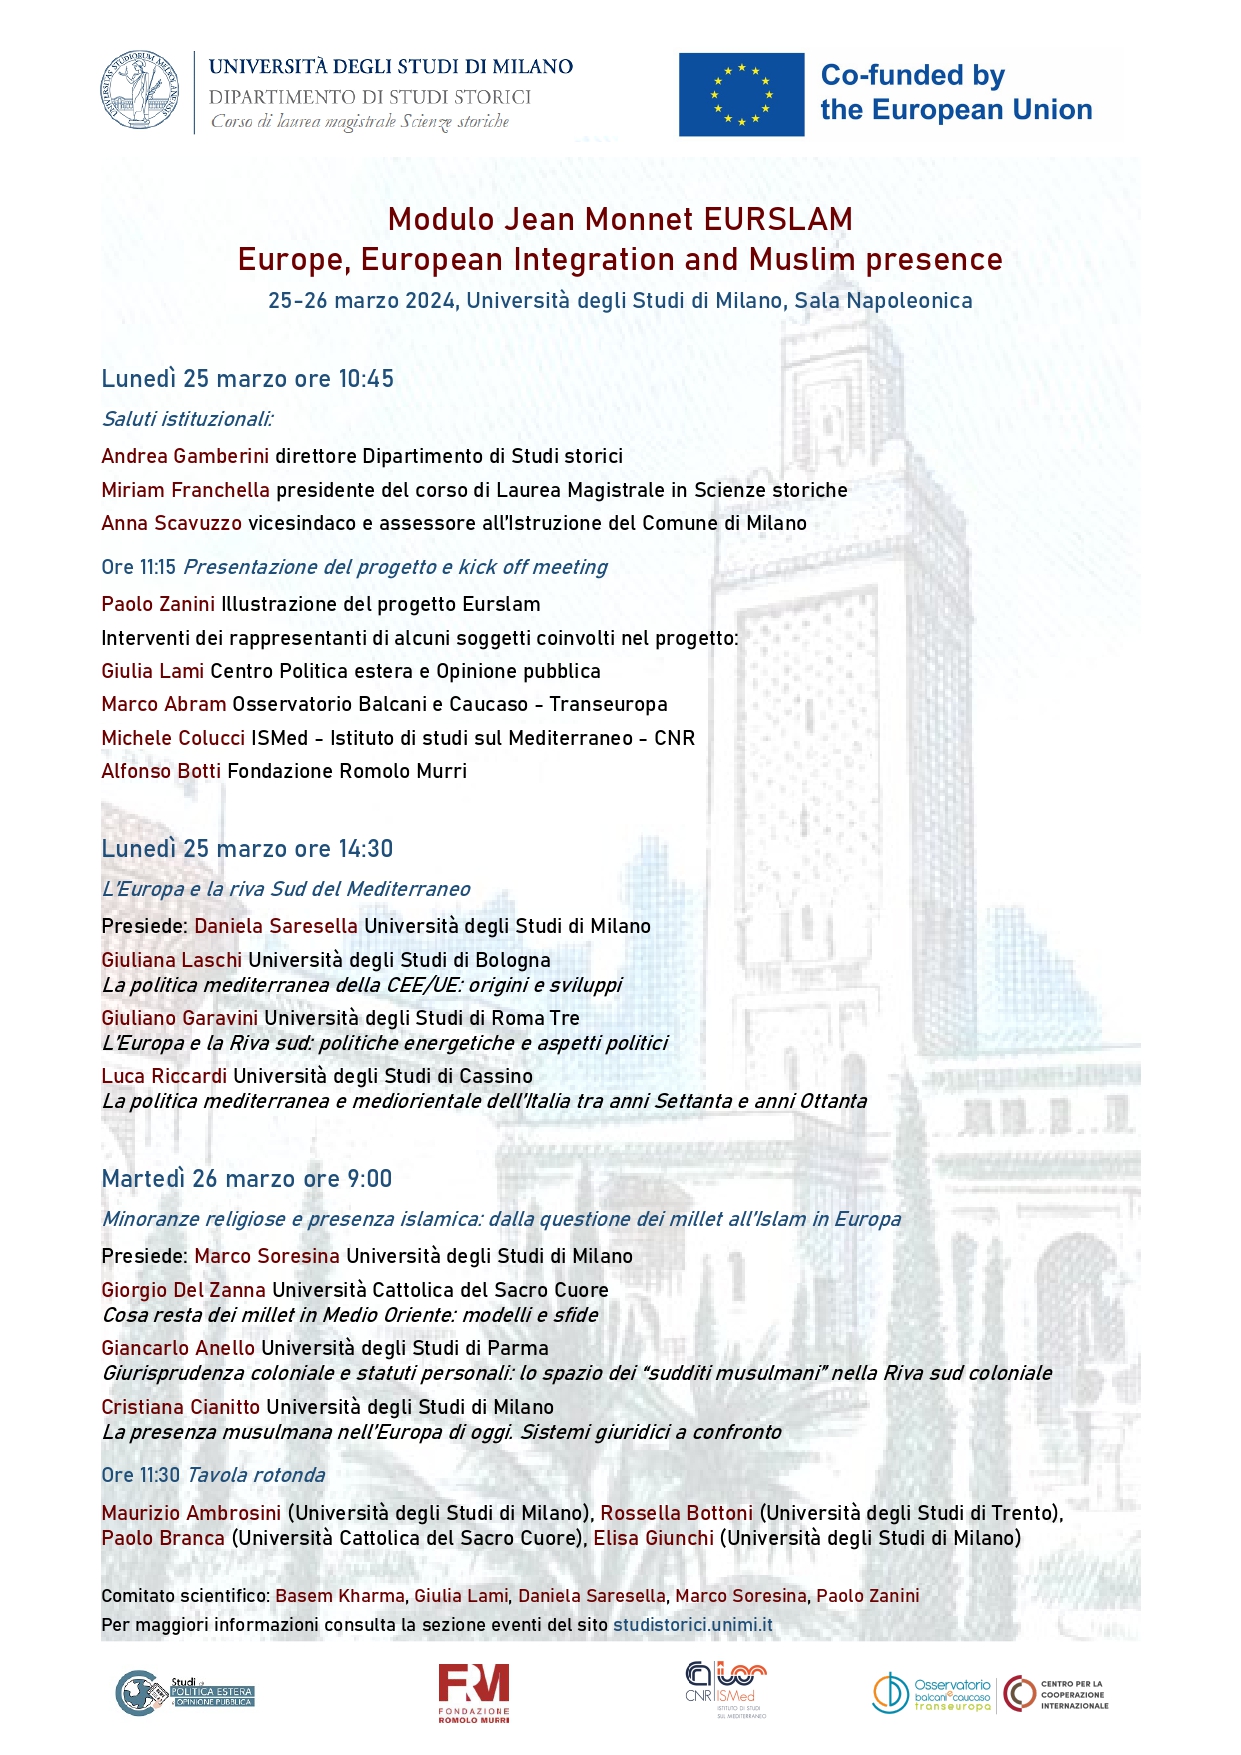 Modulo Jean Monnet EURSLAM - Europe, European Integration and Muslim presence